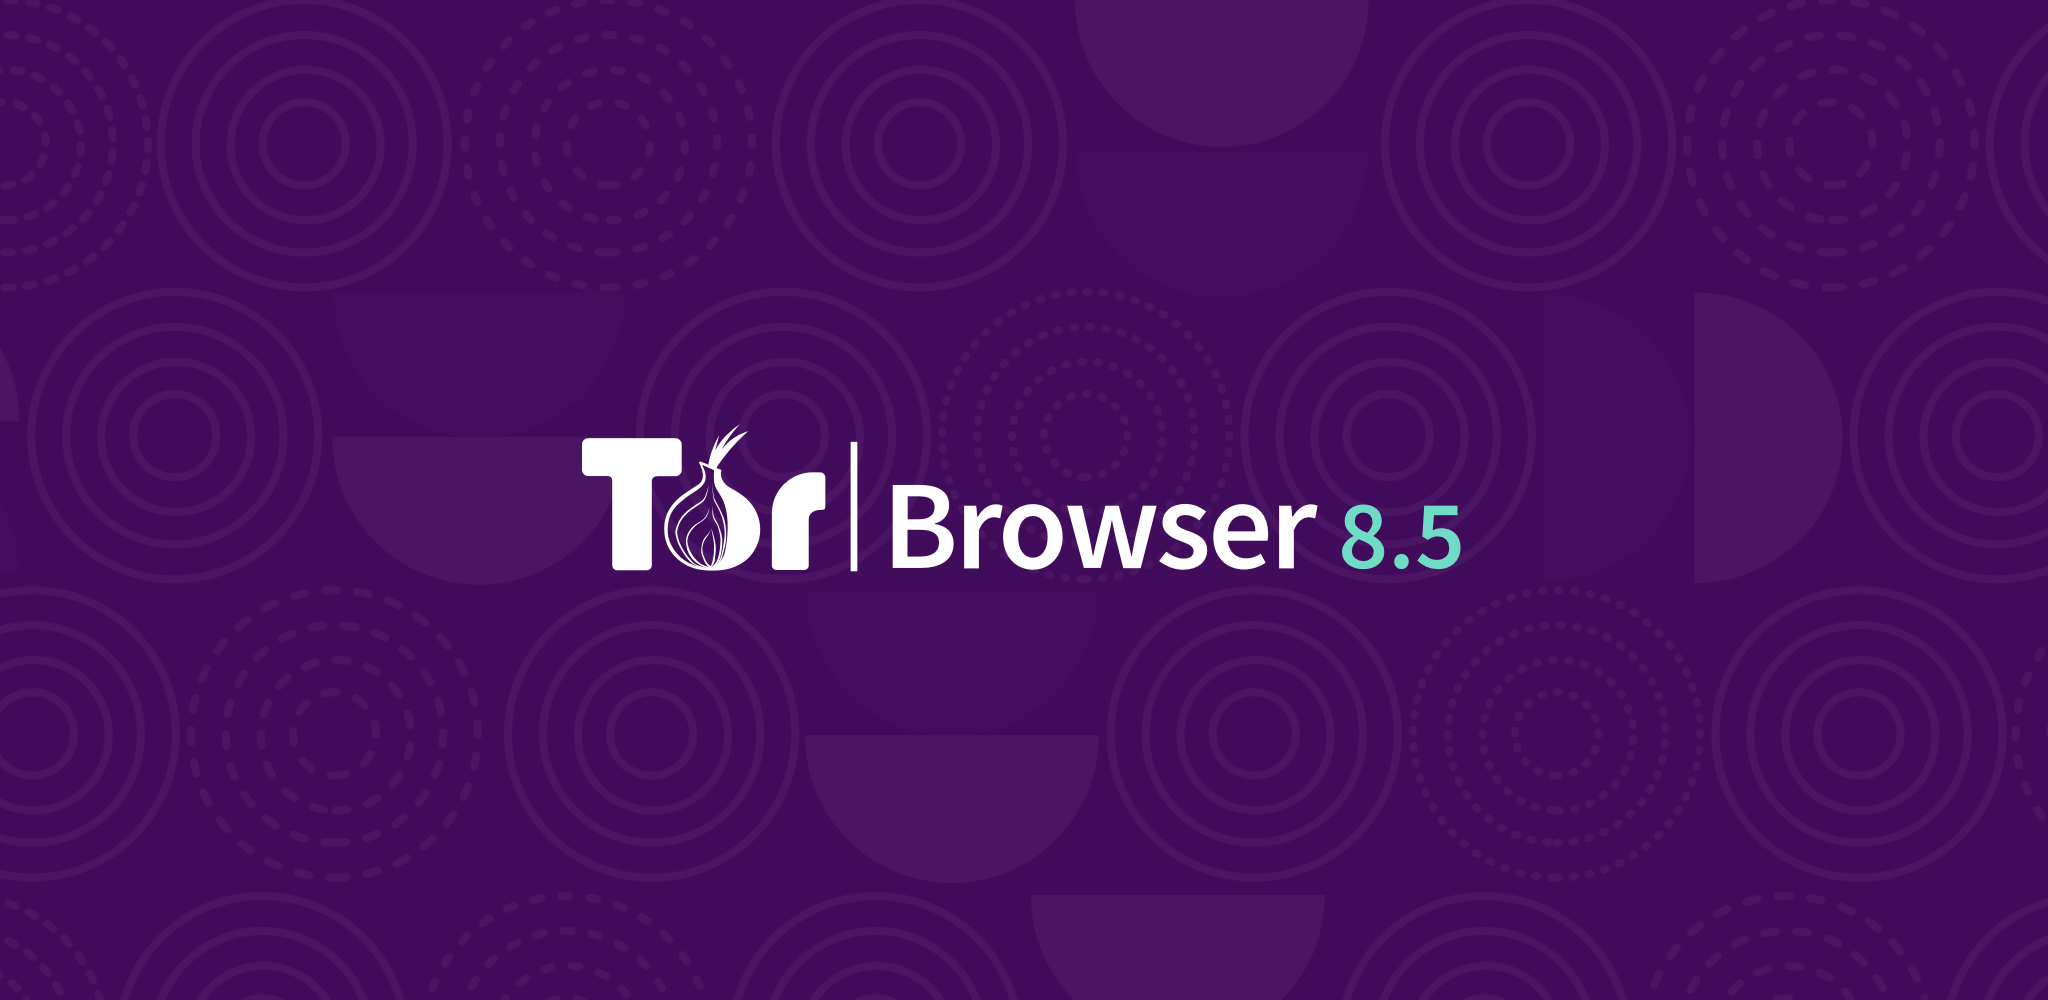 Tor browser android как пользоваться mega flash player скачать для tor browser mega